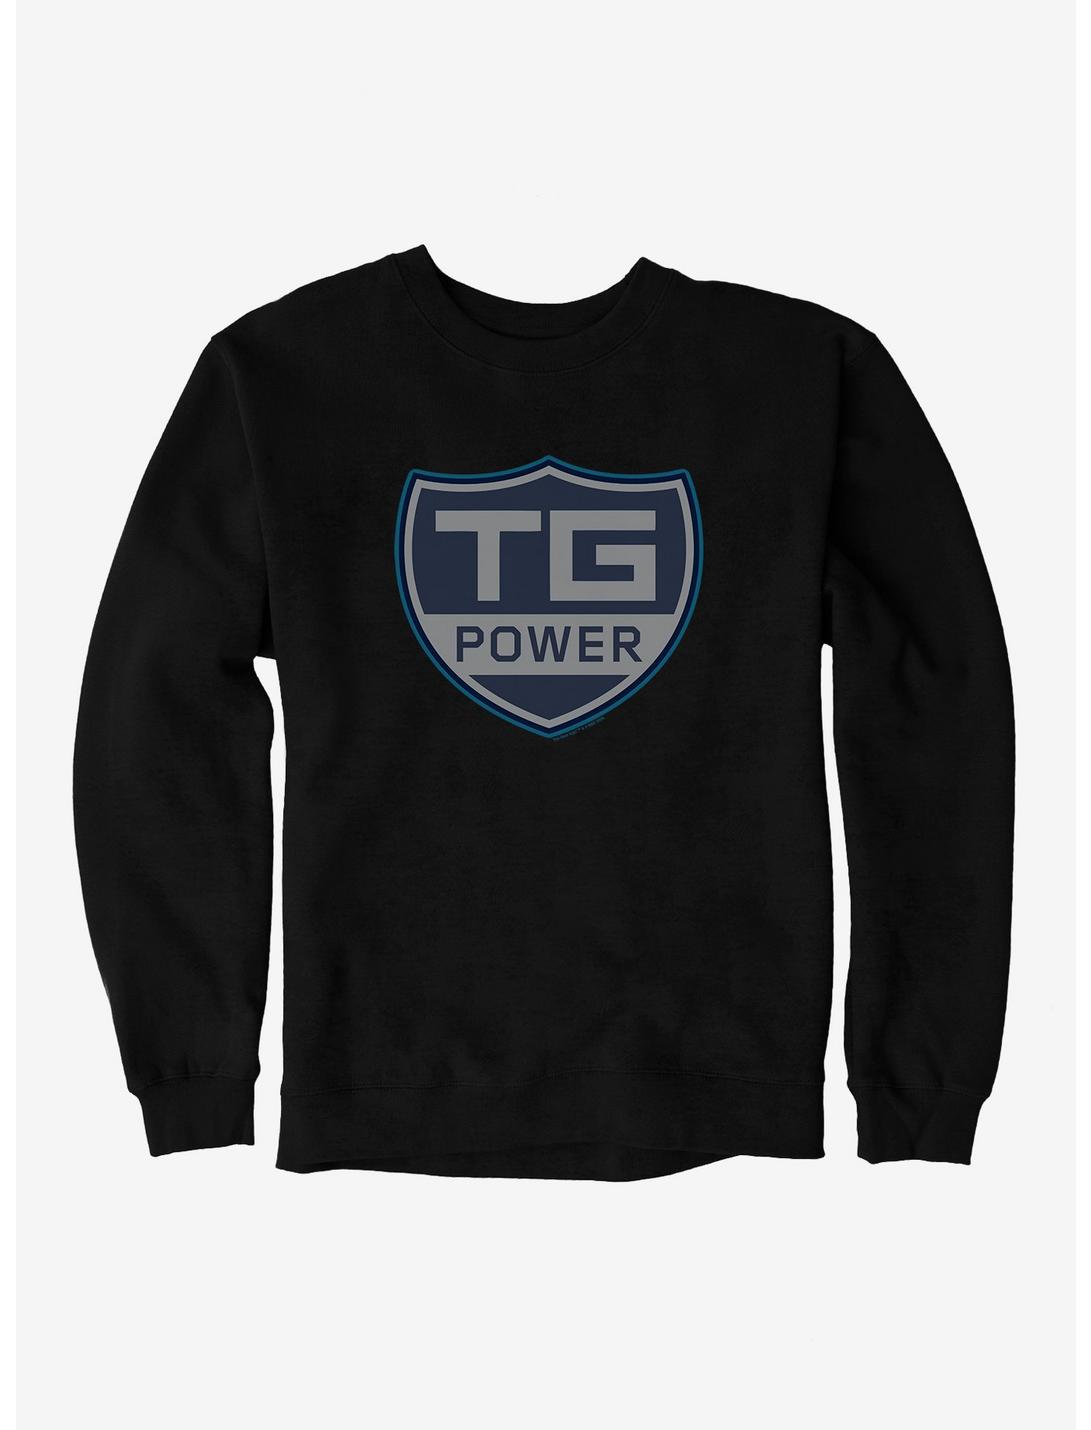 Top Gear TG Power Sweatshirt, , hi-res